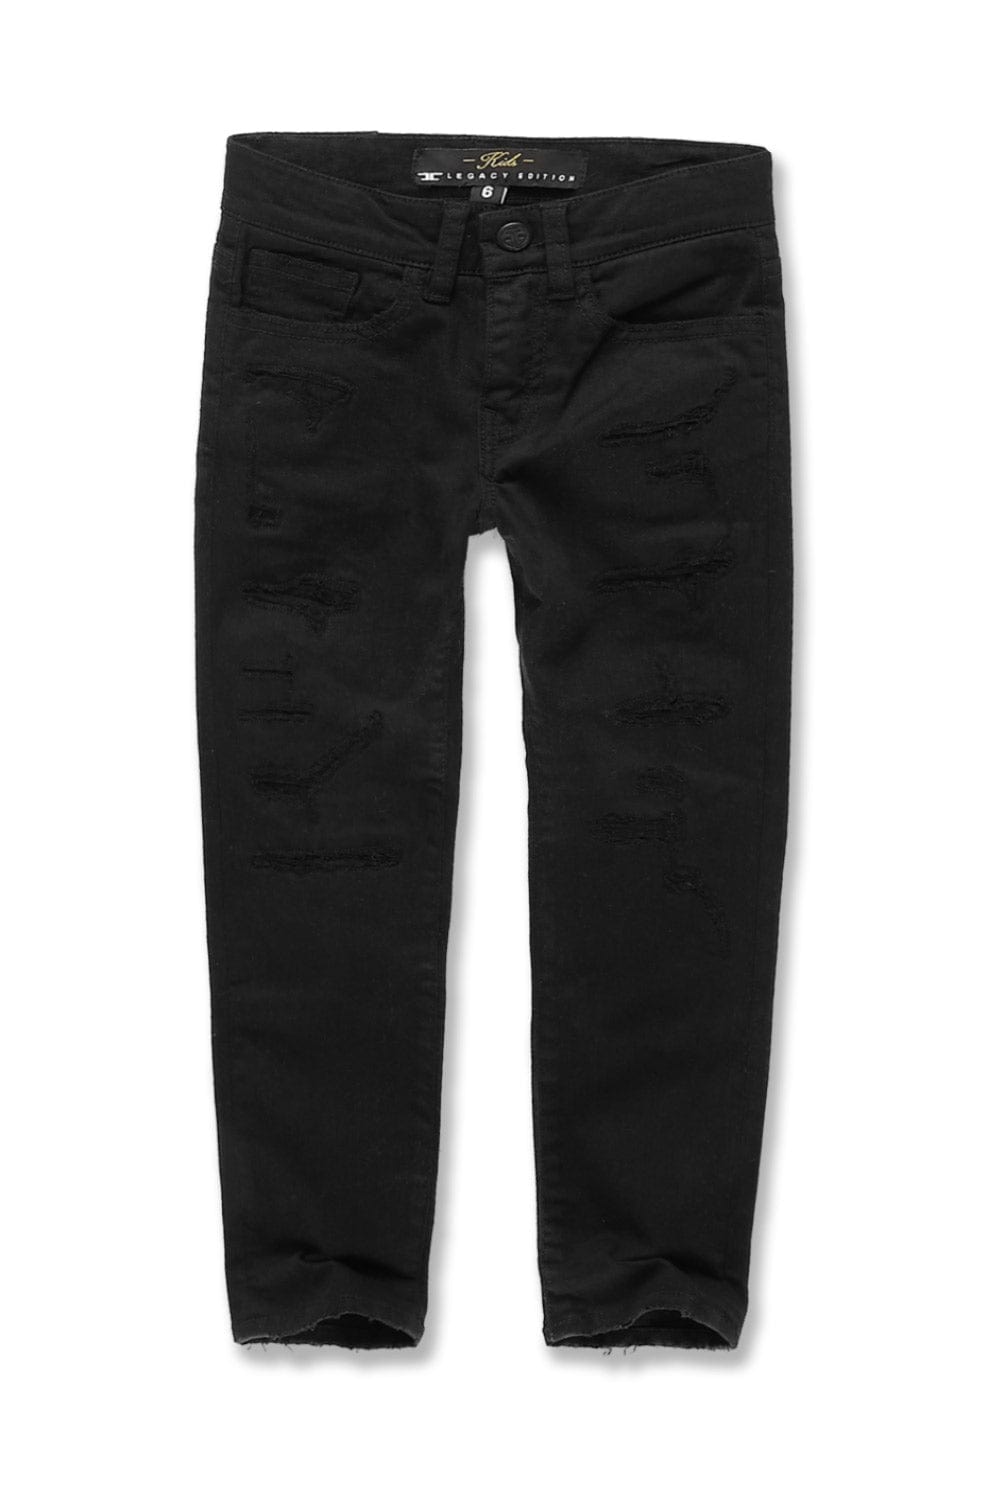 JC Kids Kids Tribeca Twill Pants (Core Colors) Black / 2